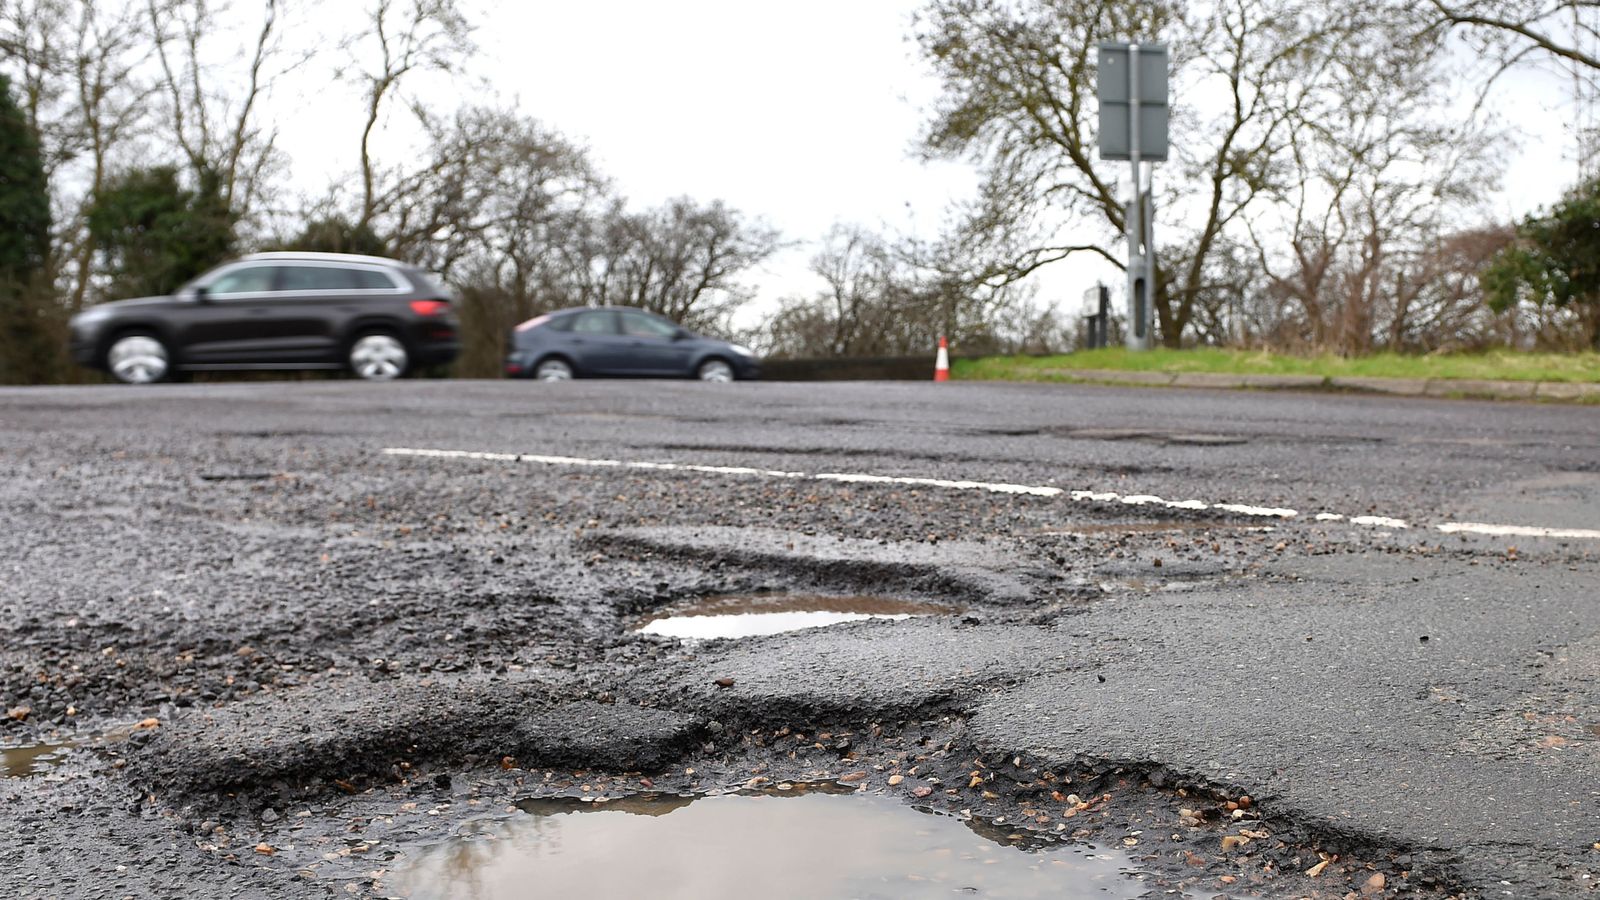 Cost of fixing potholes soars since invasion of Ukraine |  PoliticsNews